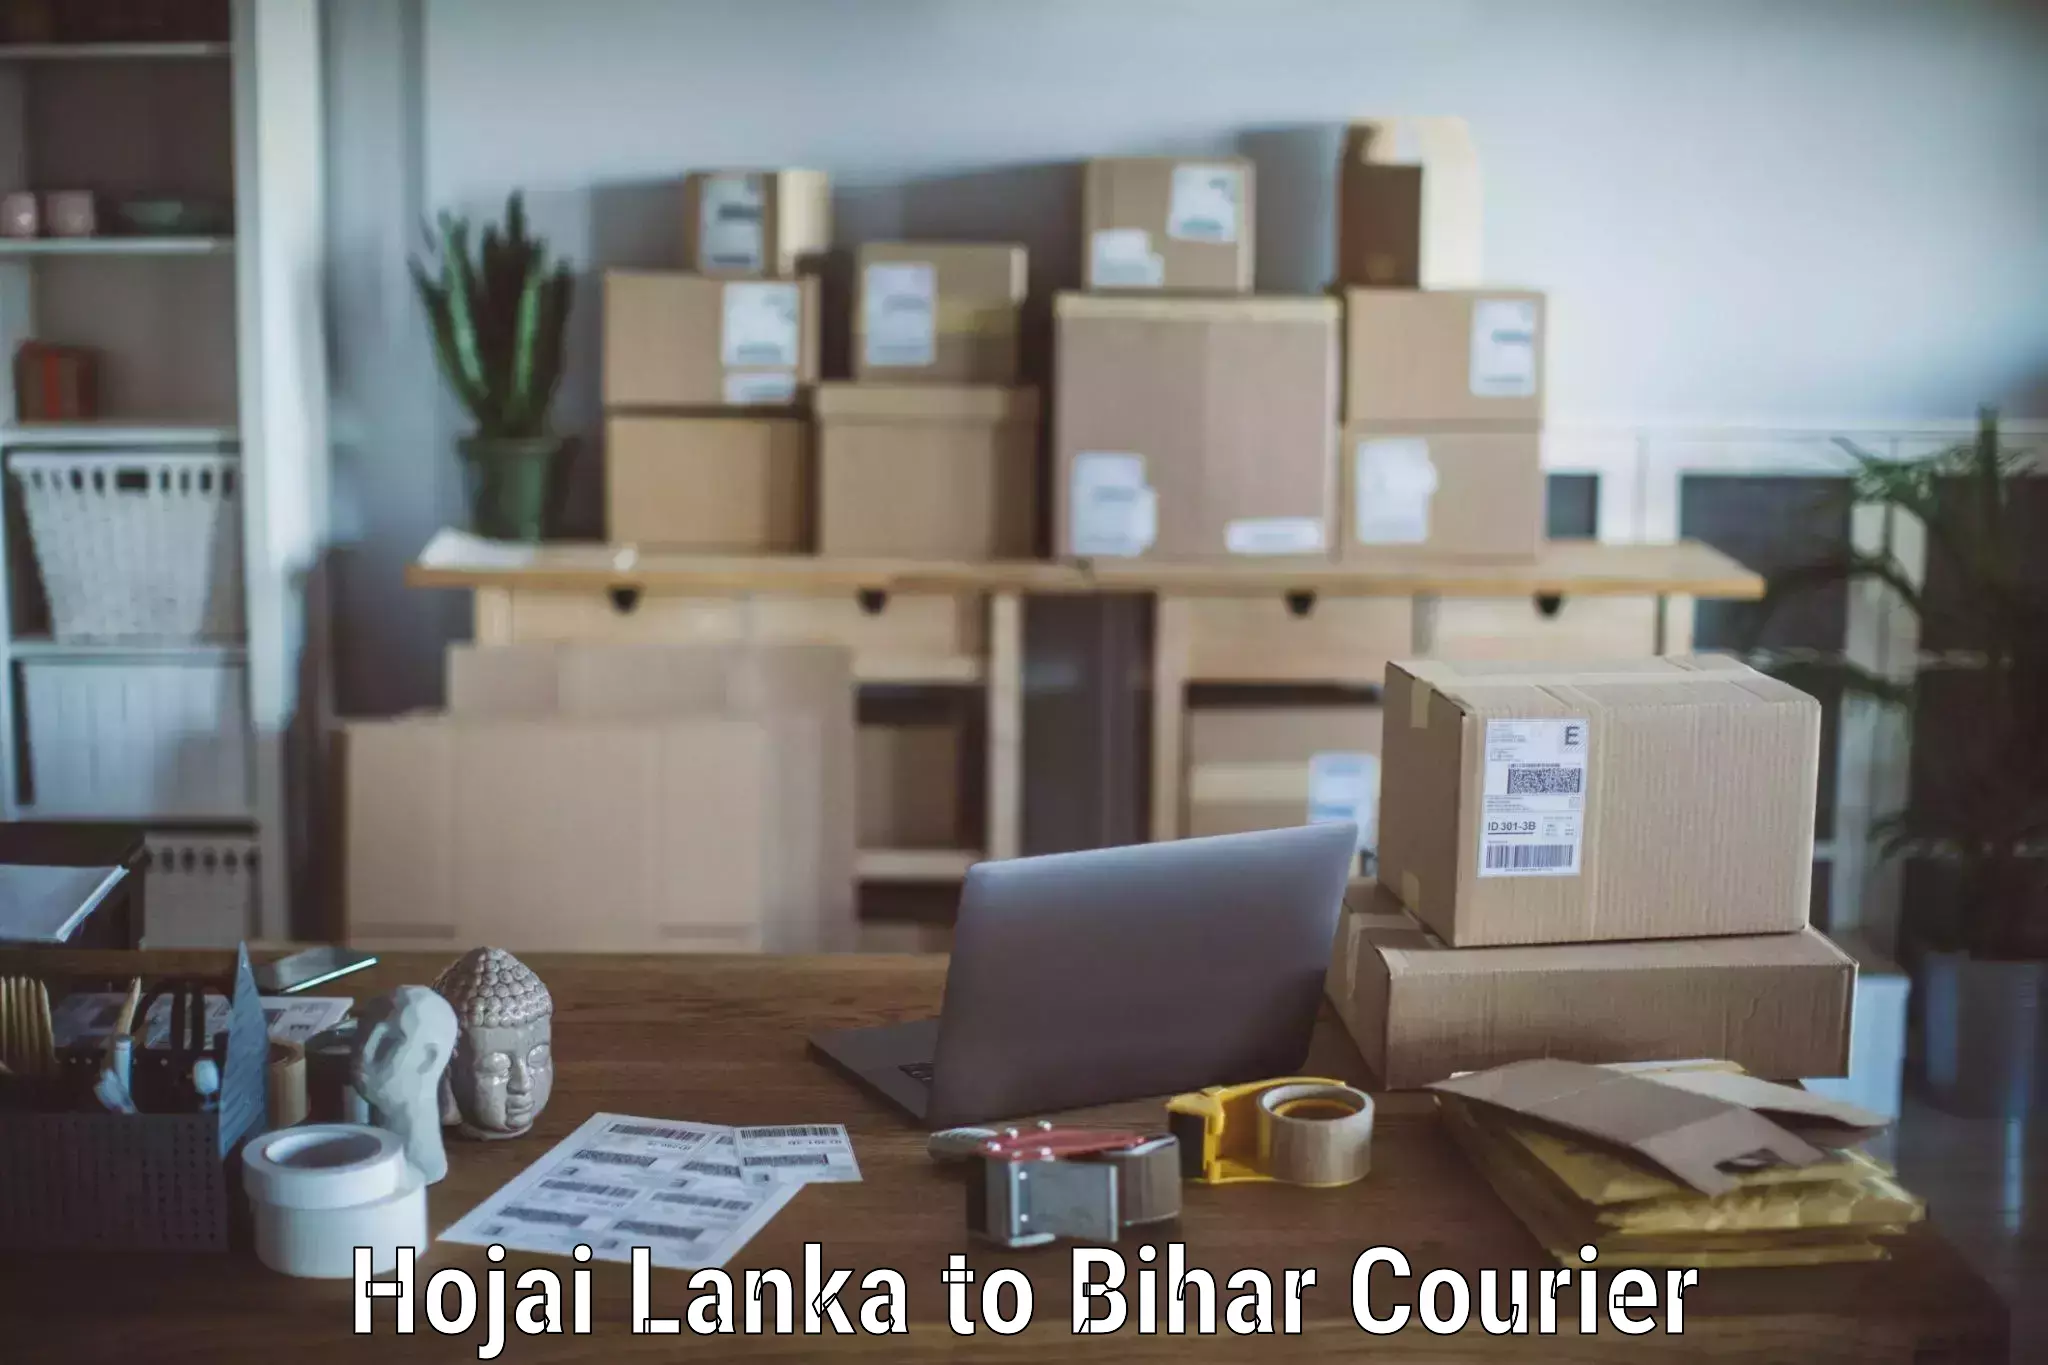 Furniture transport solutions Hojai Lanka to Bihar